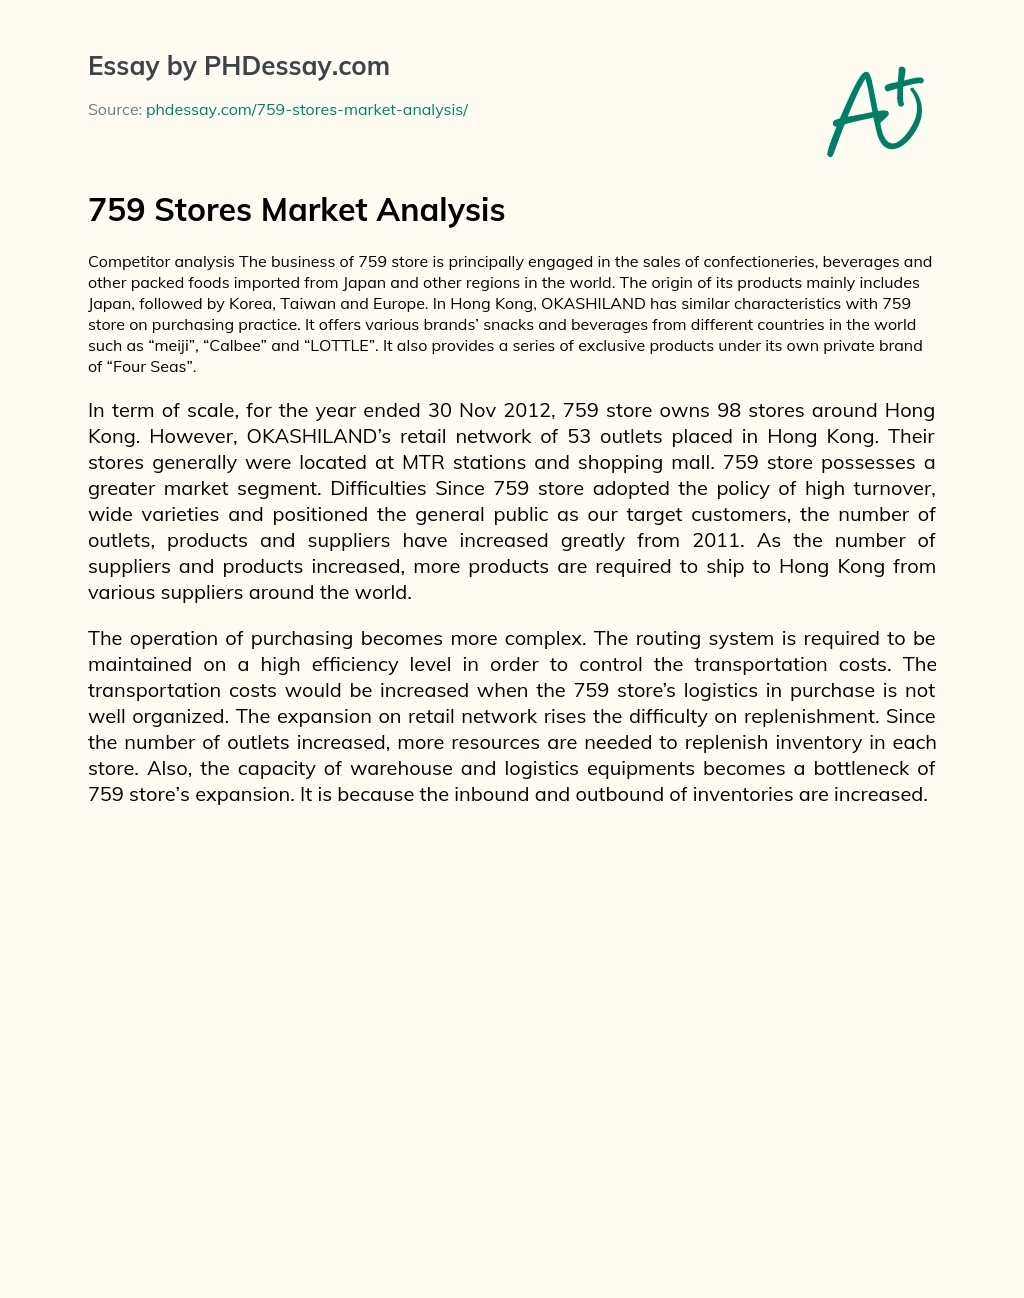 759 Stores Market Analysis essay